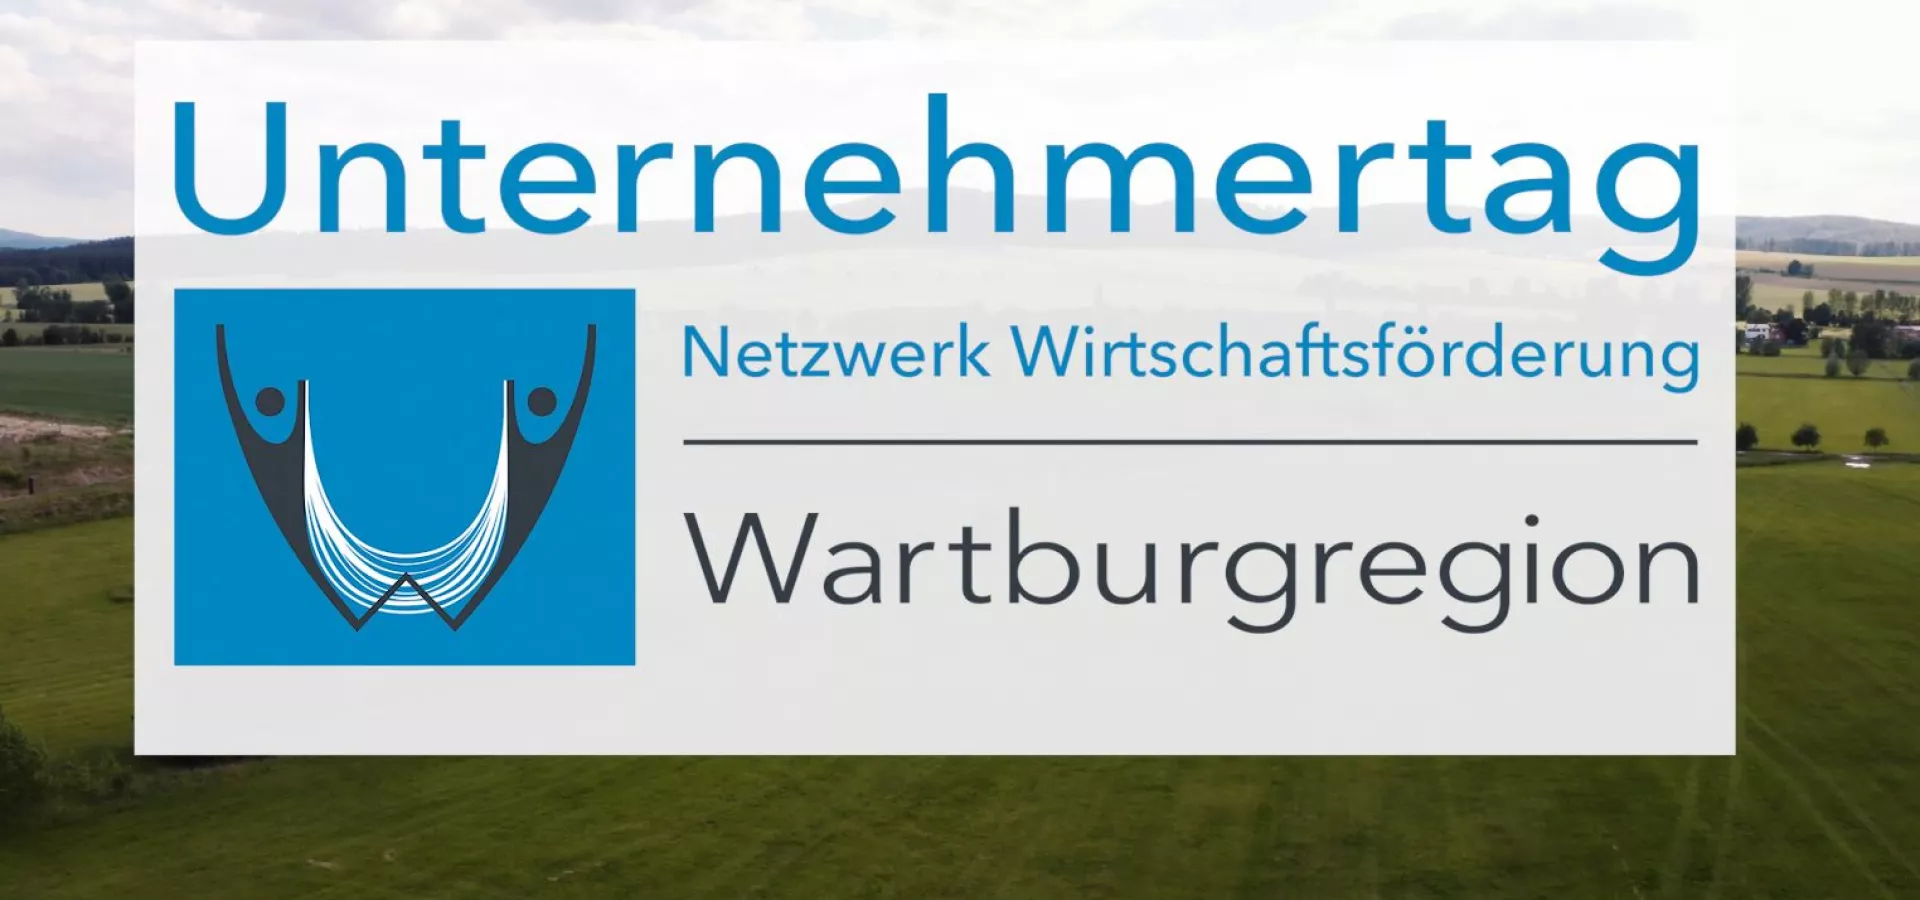 22. Entrepreneur Day of the Wartburg Region at ruhlamat